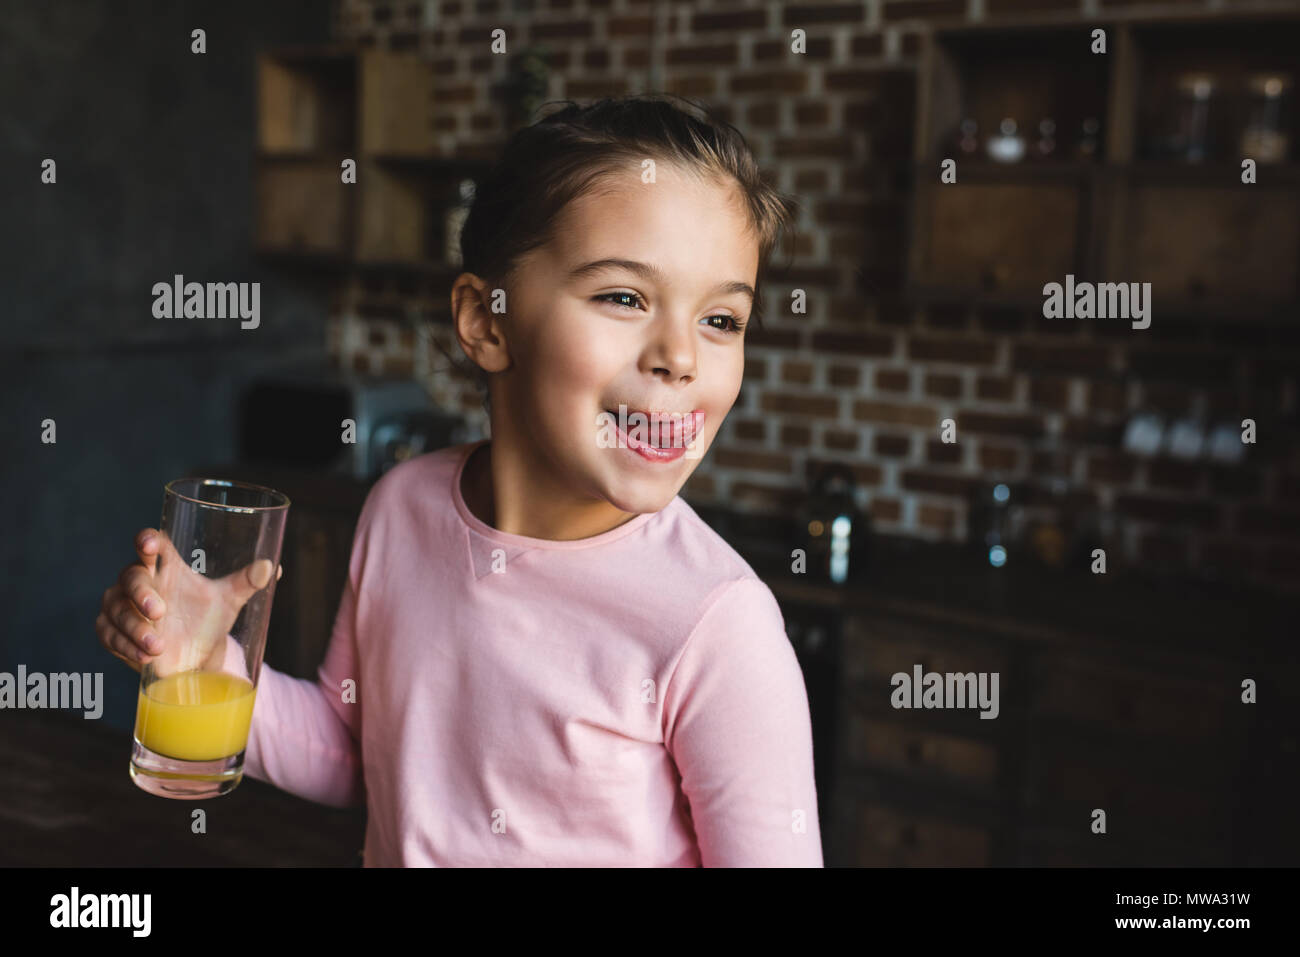 adorable happy child drinking orange juice and licking lips Stock Photo